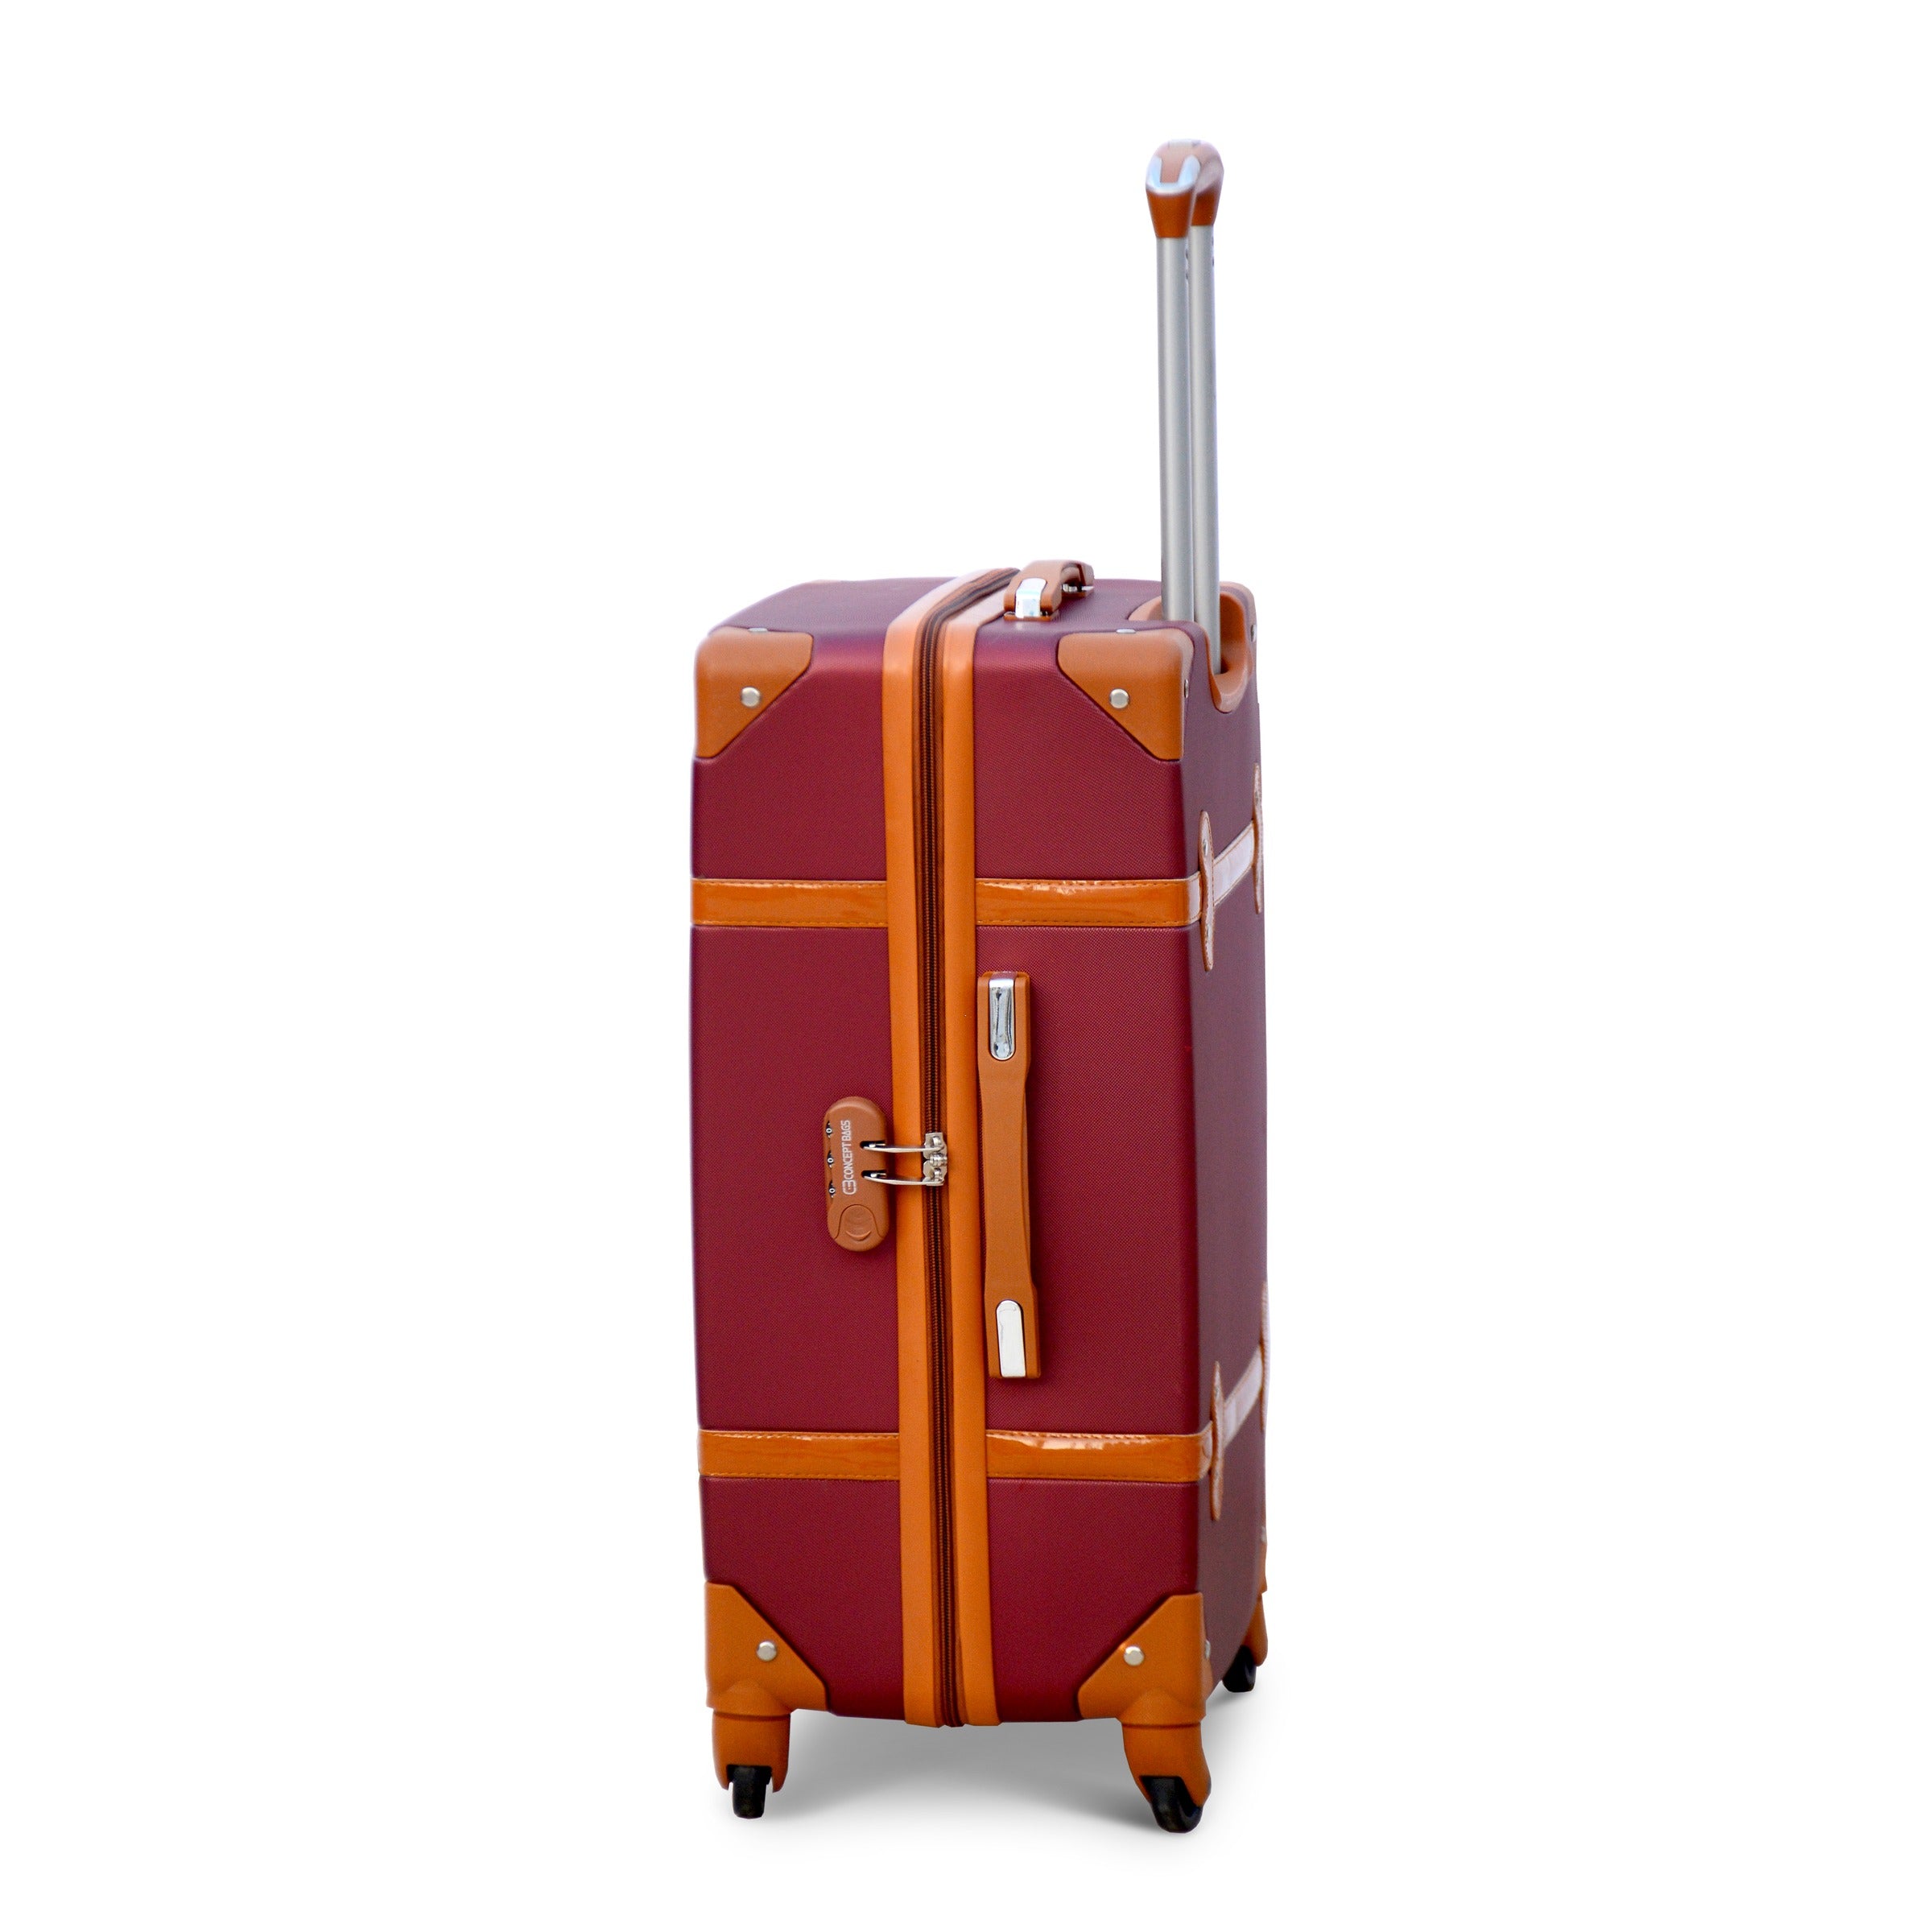 Corner Guard Lightweight ABS Luggage | Hard Case Trolley Bag | 24 Inches | 2 Year Warranty | Burgundy Colour